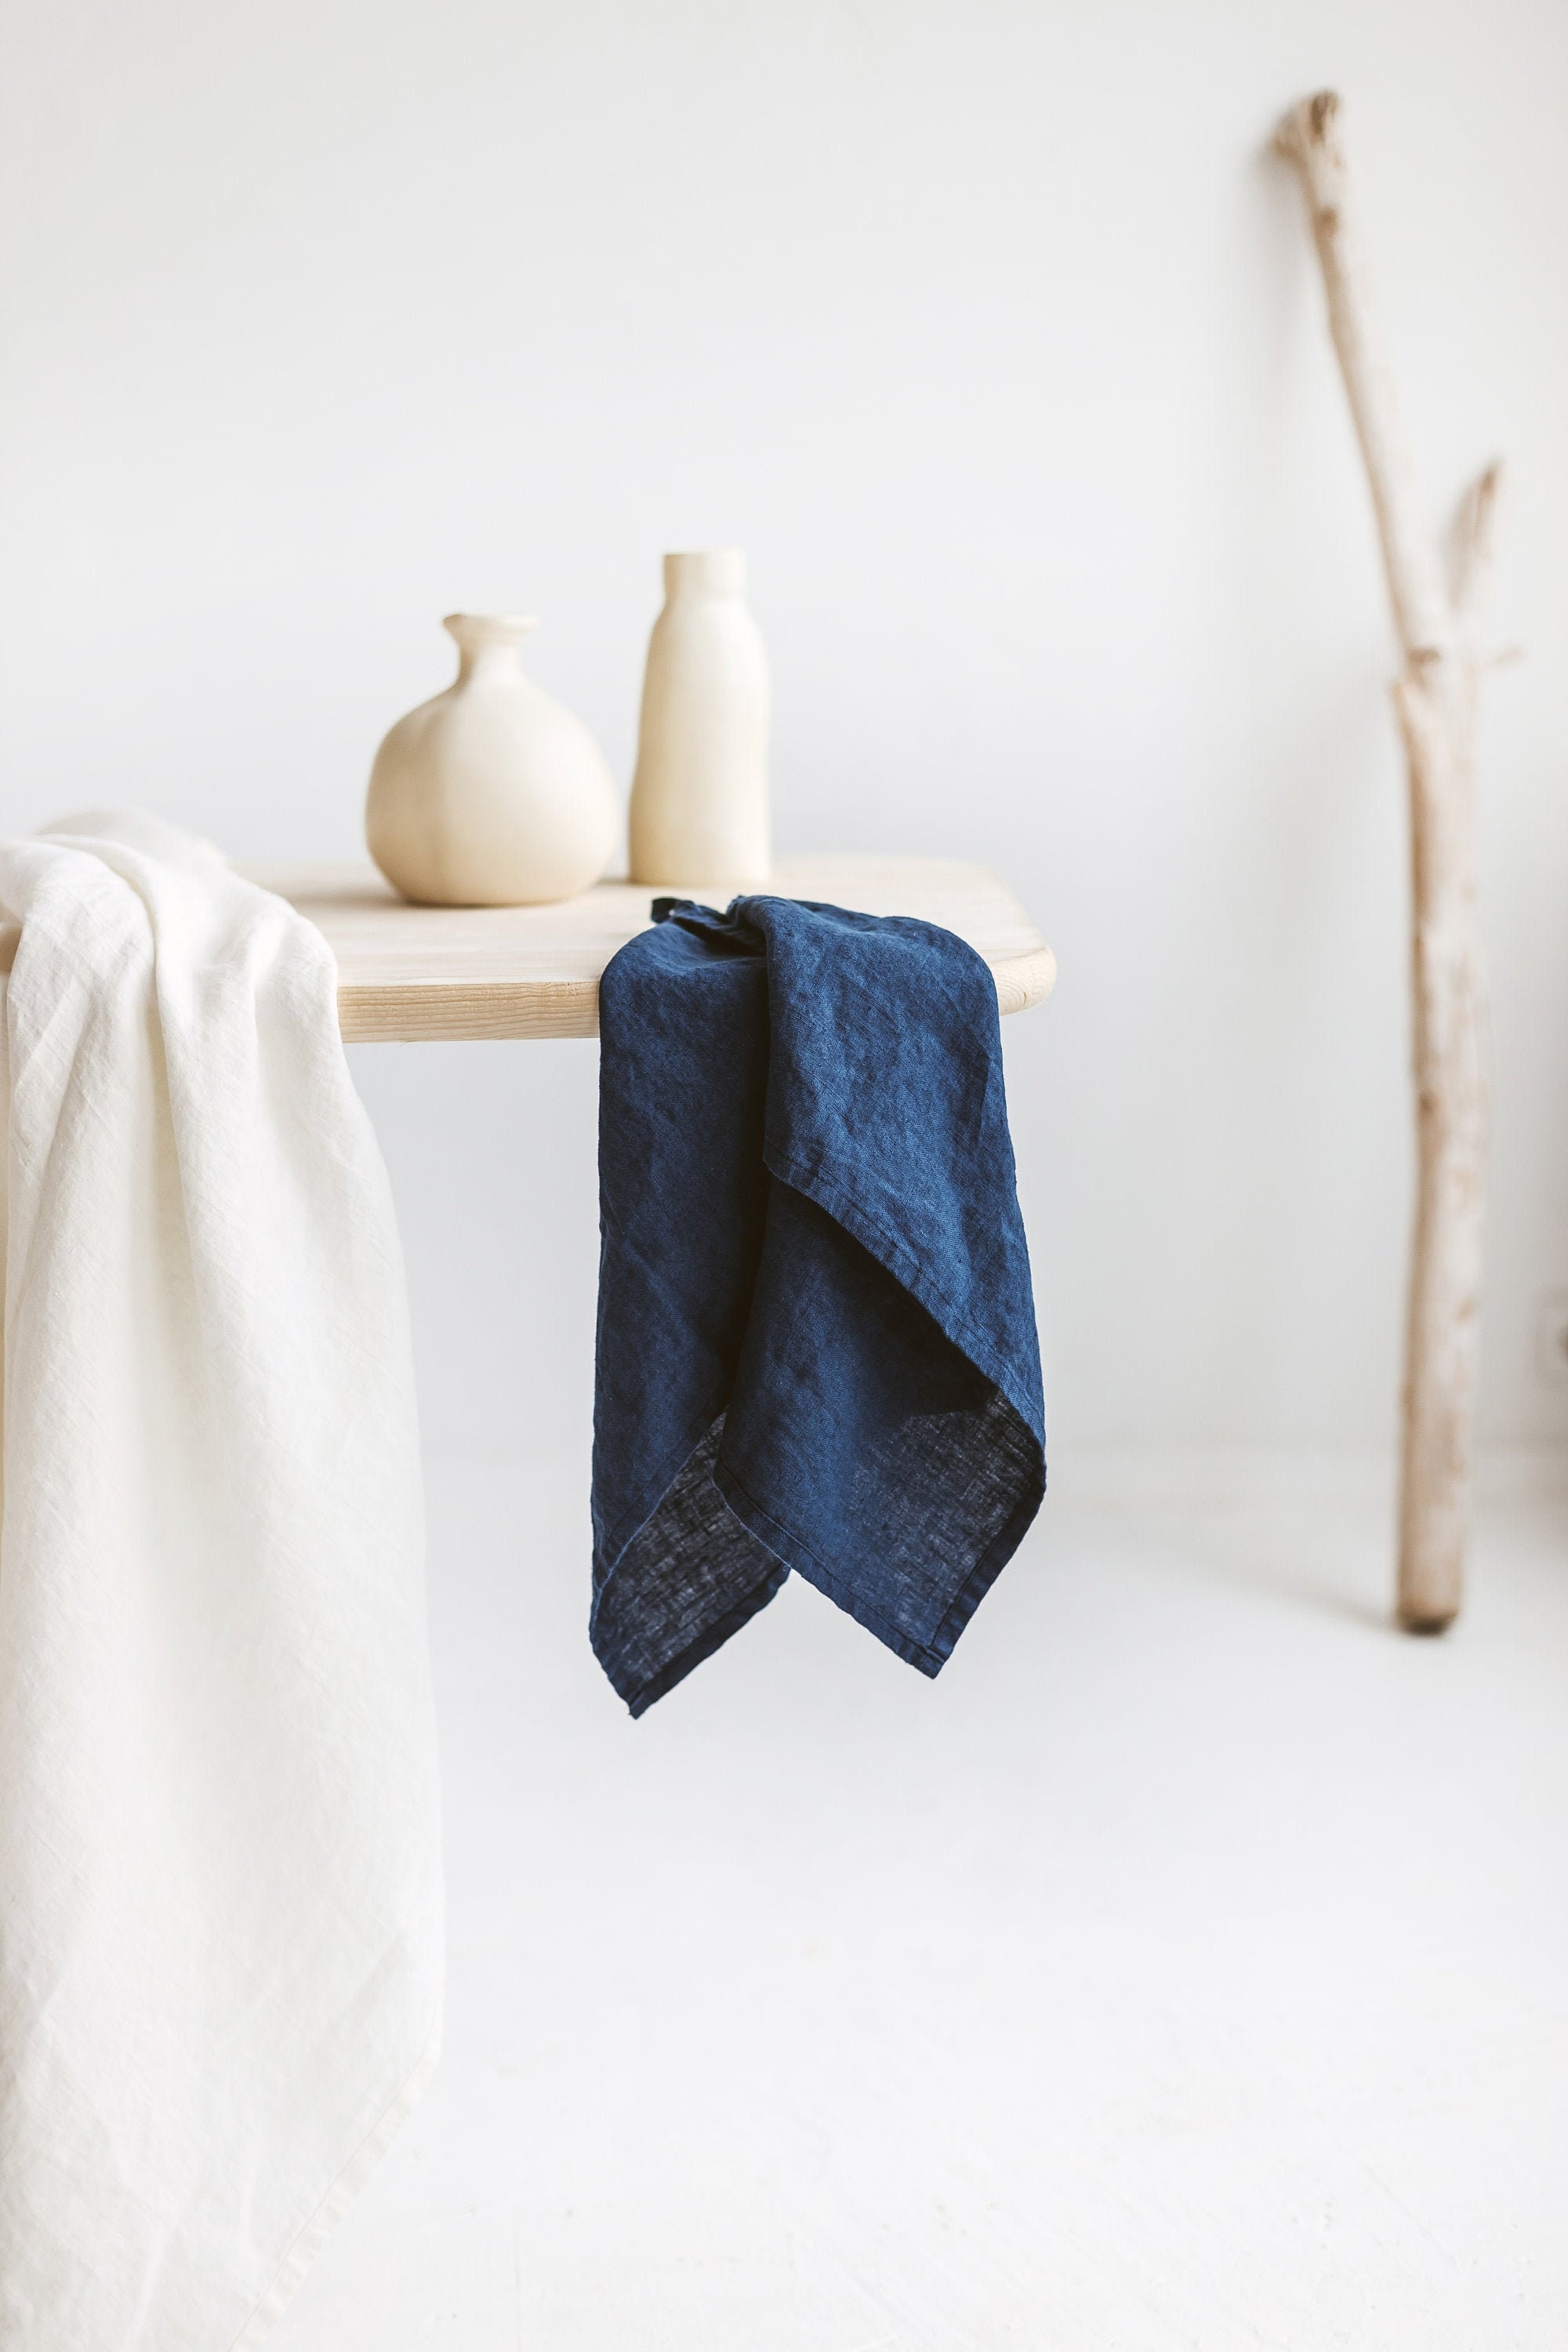 Malena Floral Tea Towel - ruby chocolate - cotton-linen kitchen towel –  patterntalent